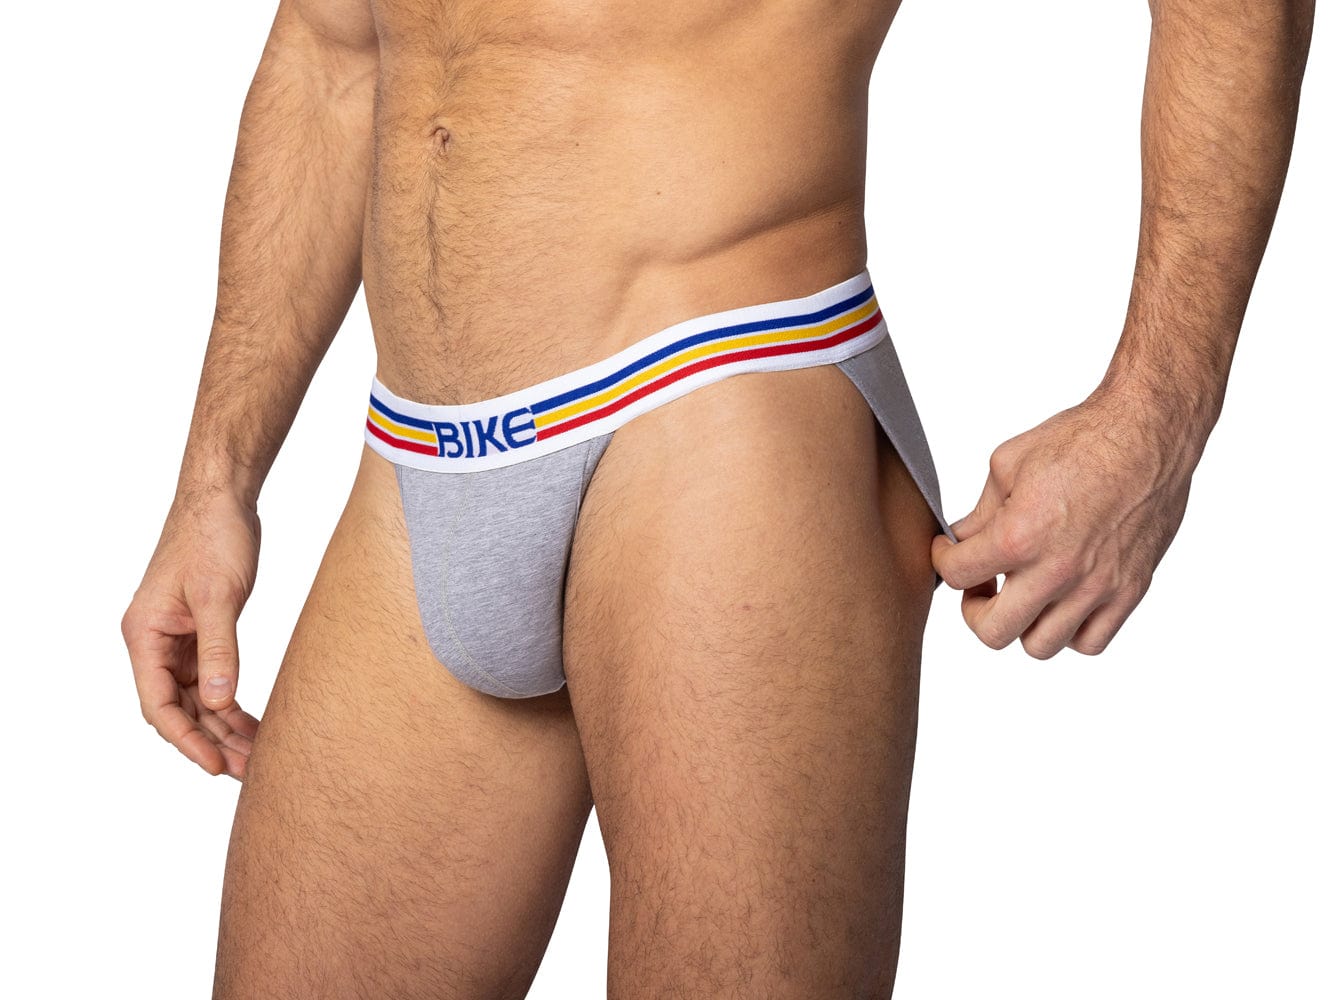 Gray Bike Athletic underwear jock briefs